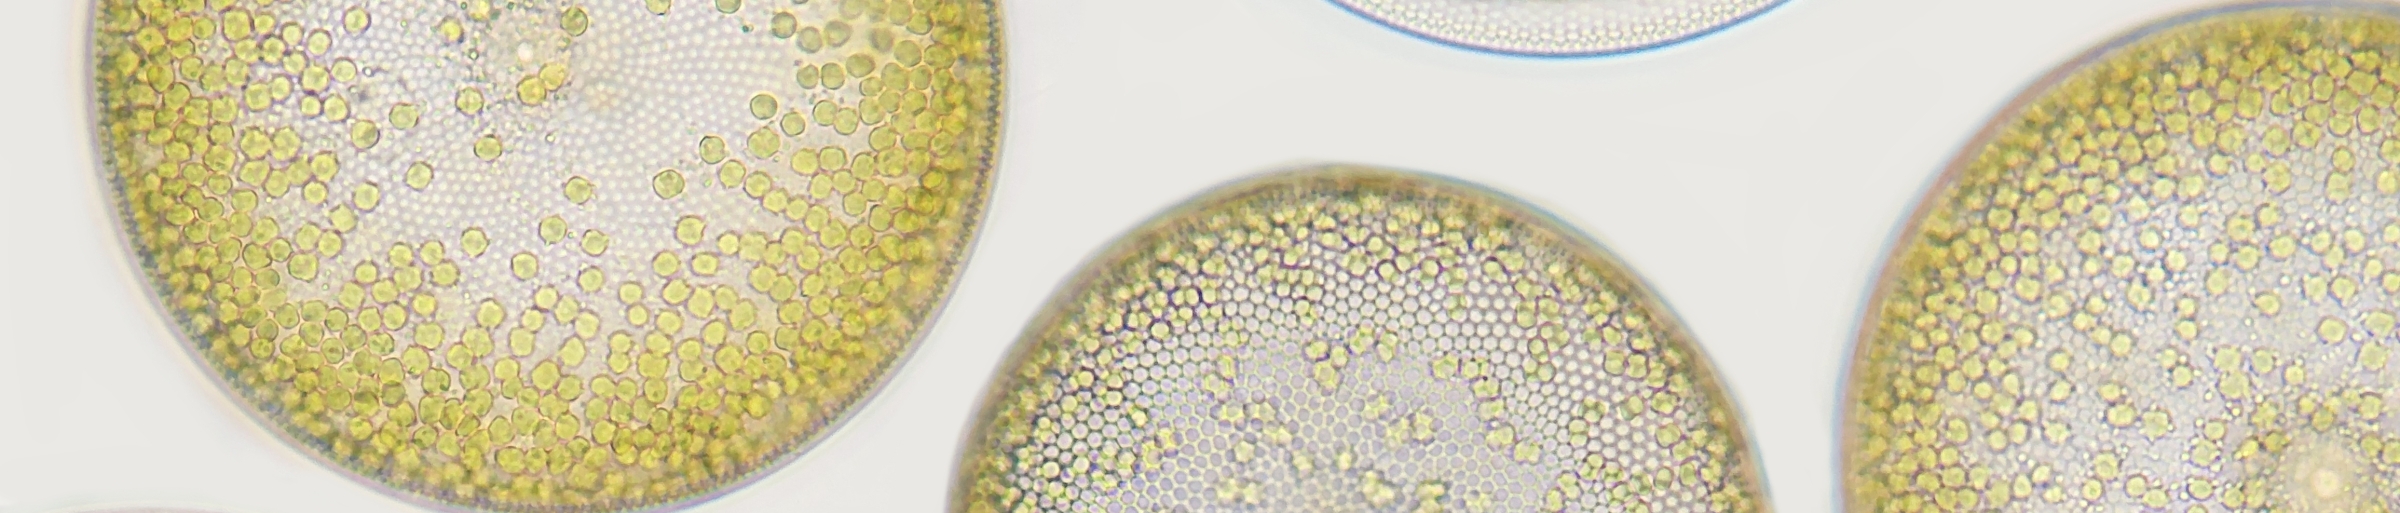 microalgae close up